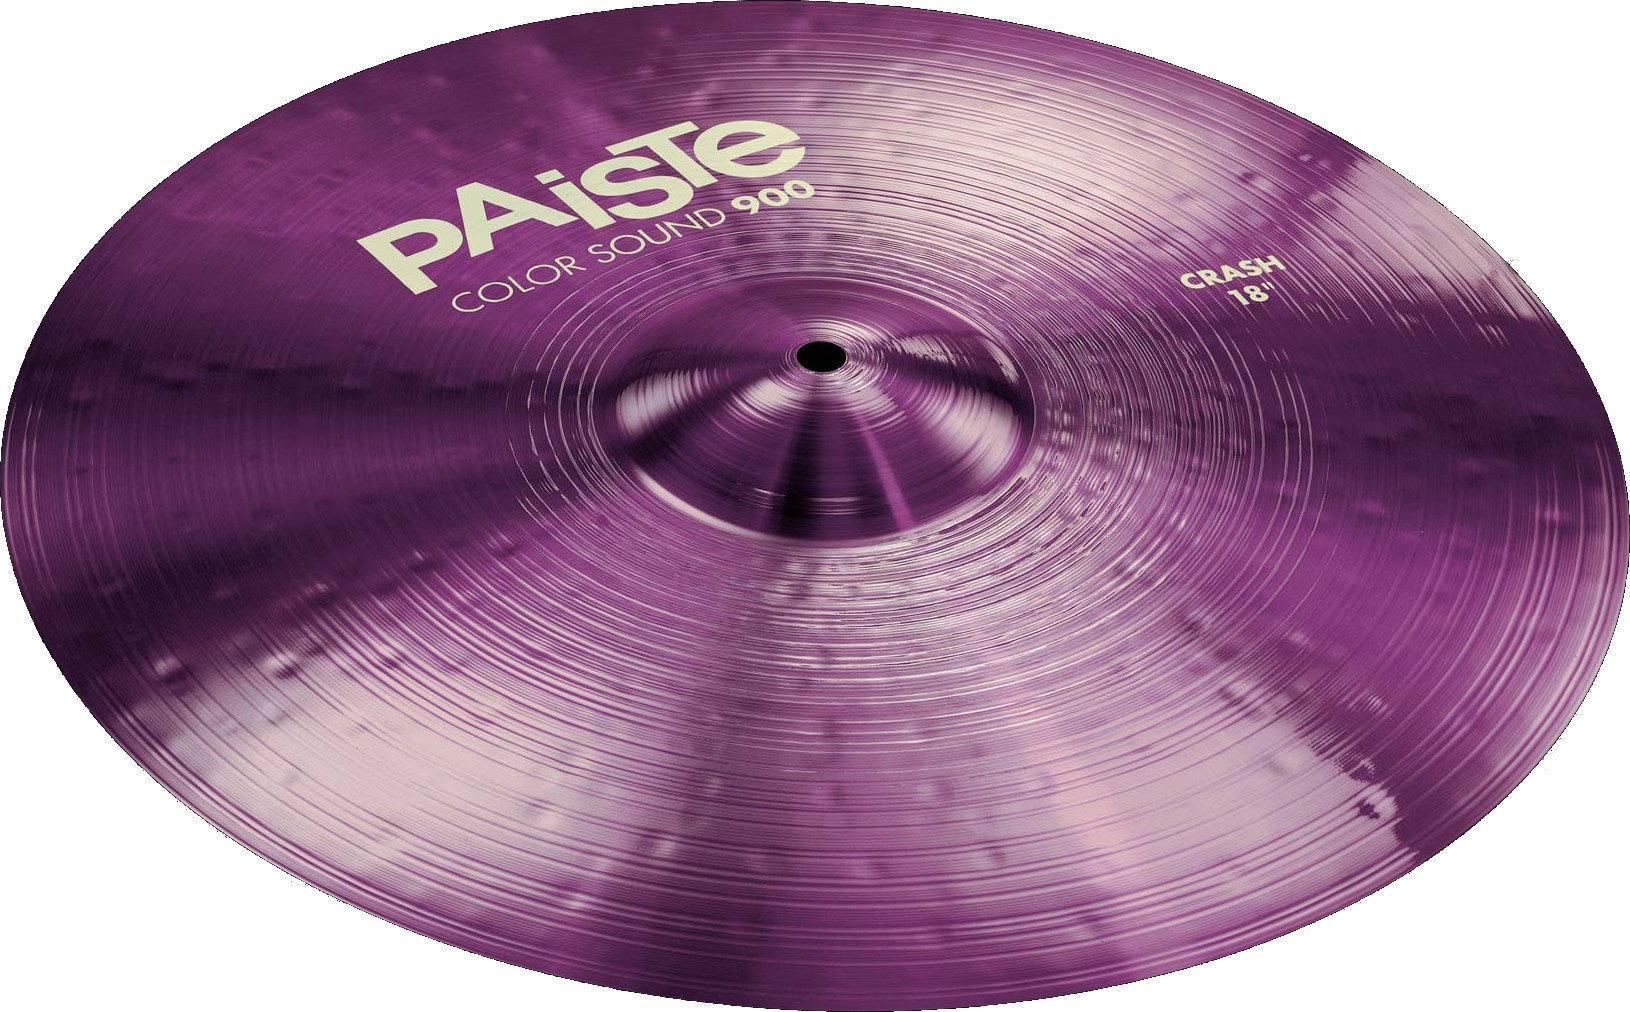 Crash Cymbal Paiste Color Sound 900 Crash Cymbal 17" Violett